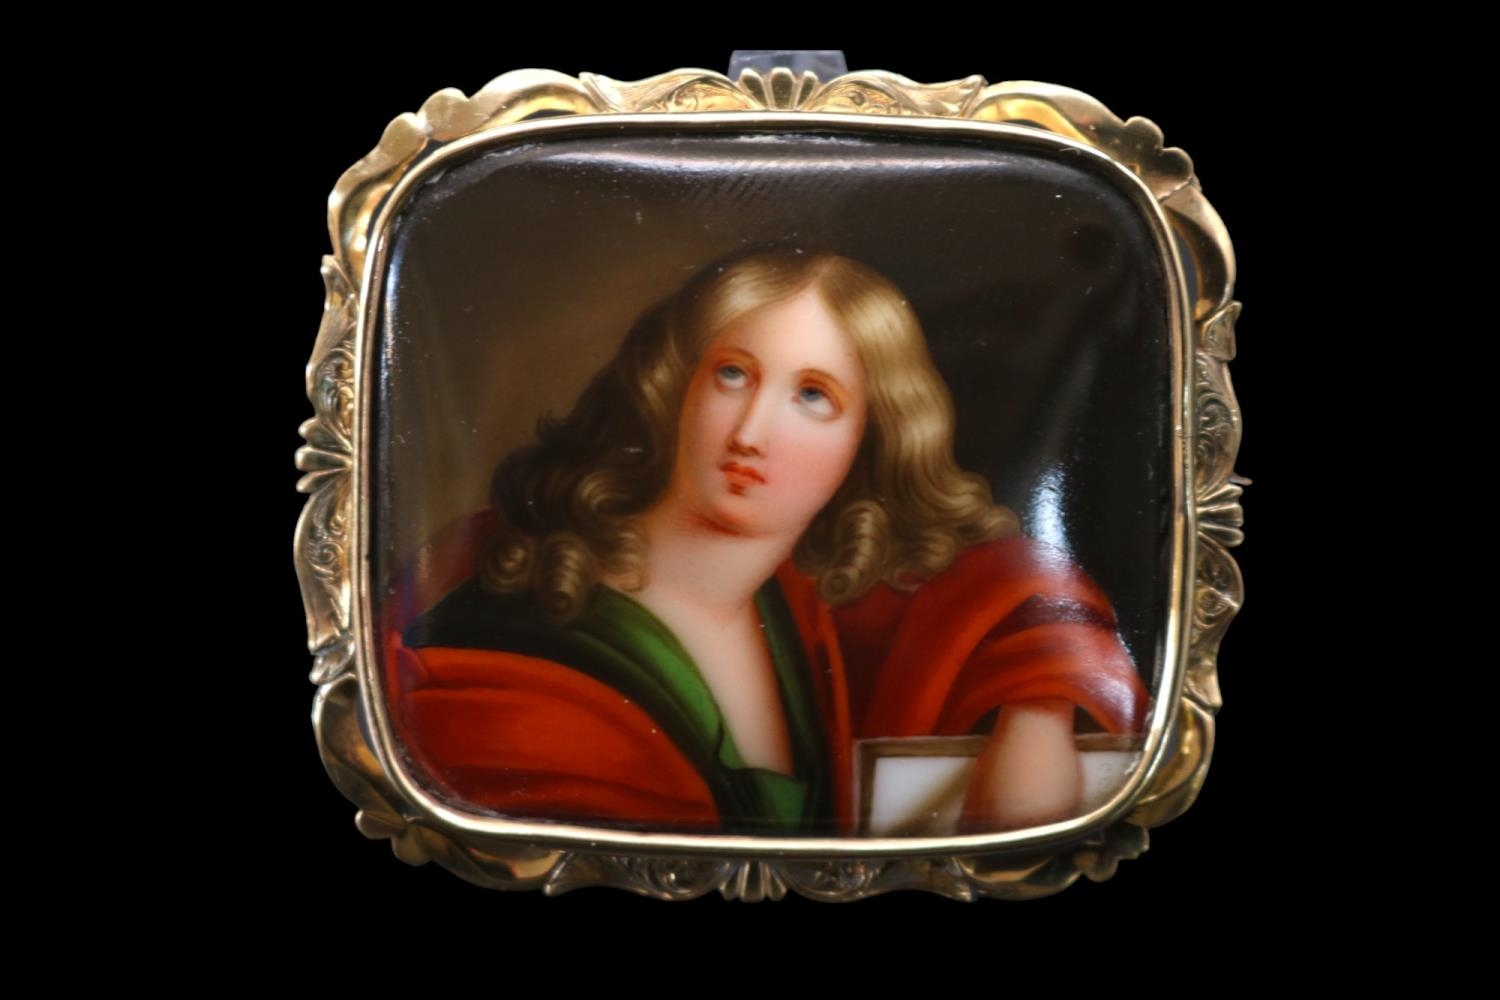 Victorian Porcelain portrait Cameo brooch of rectangular form depicting a Pre-Raphaelite portrait in